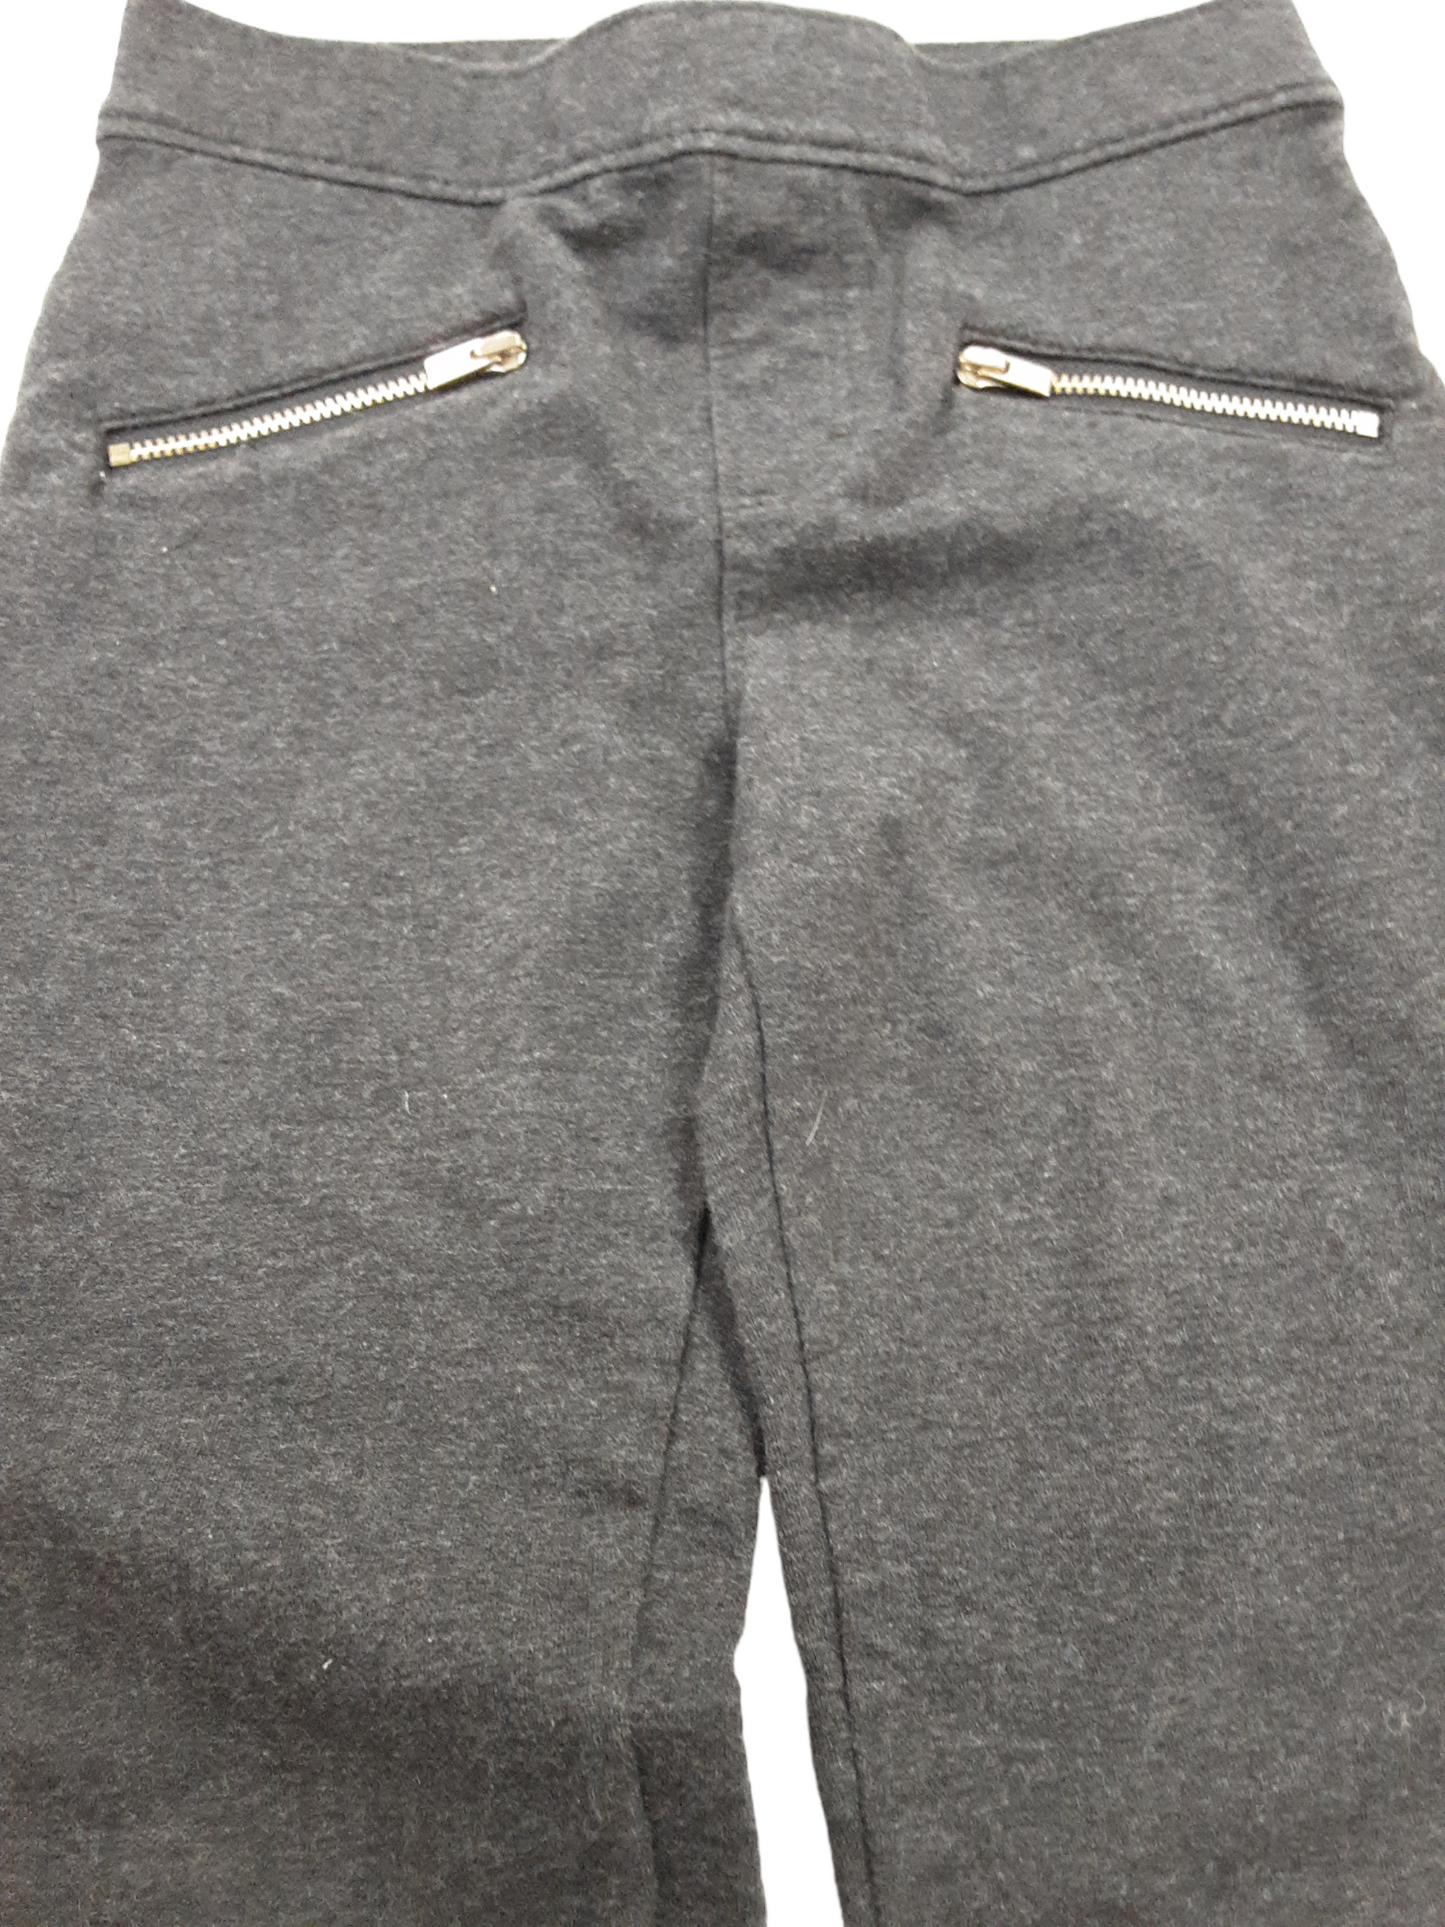 Charcoal grey legging size 7